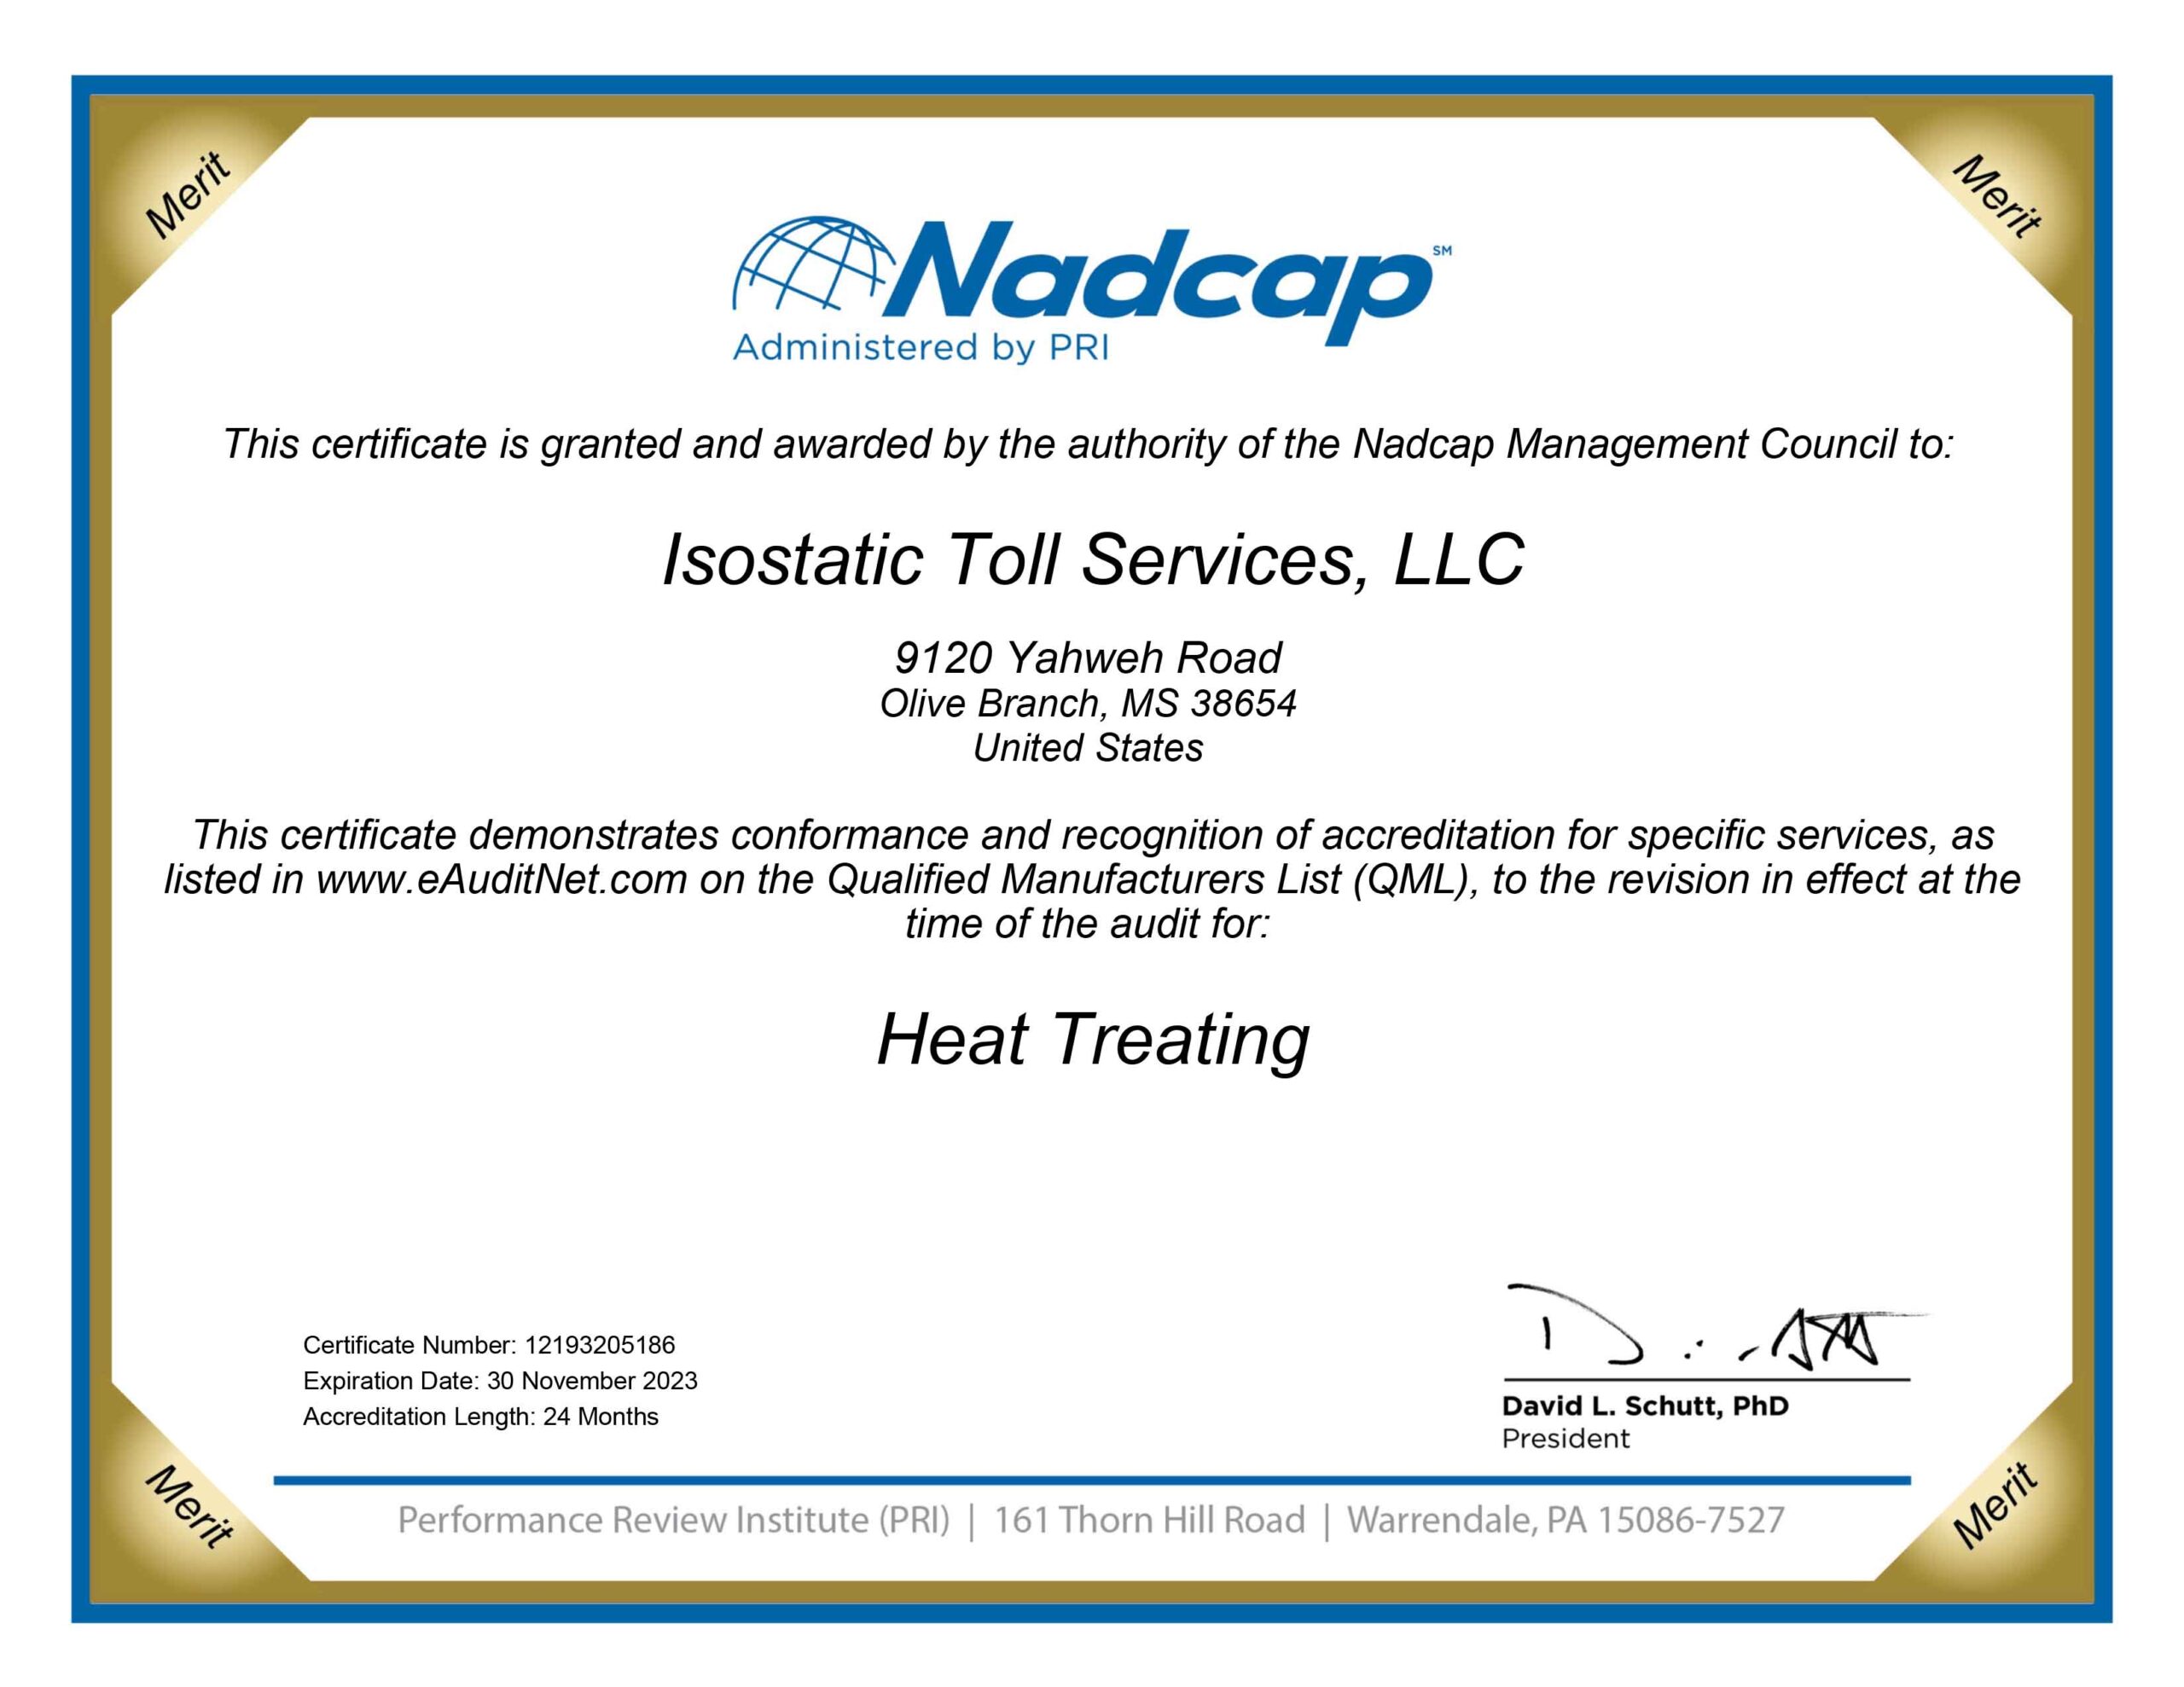 Certificate Nadcap (Aerospace) Heat Treating audit # 205186